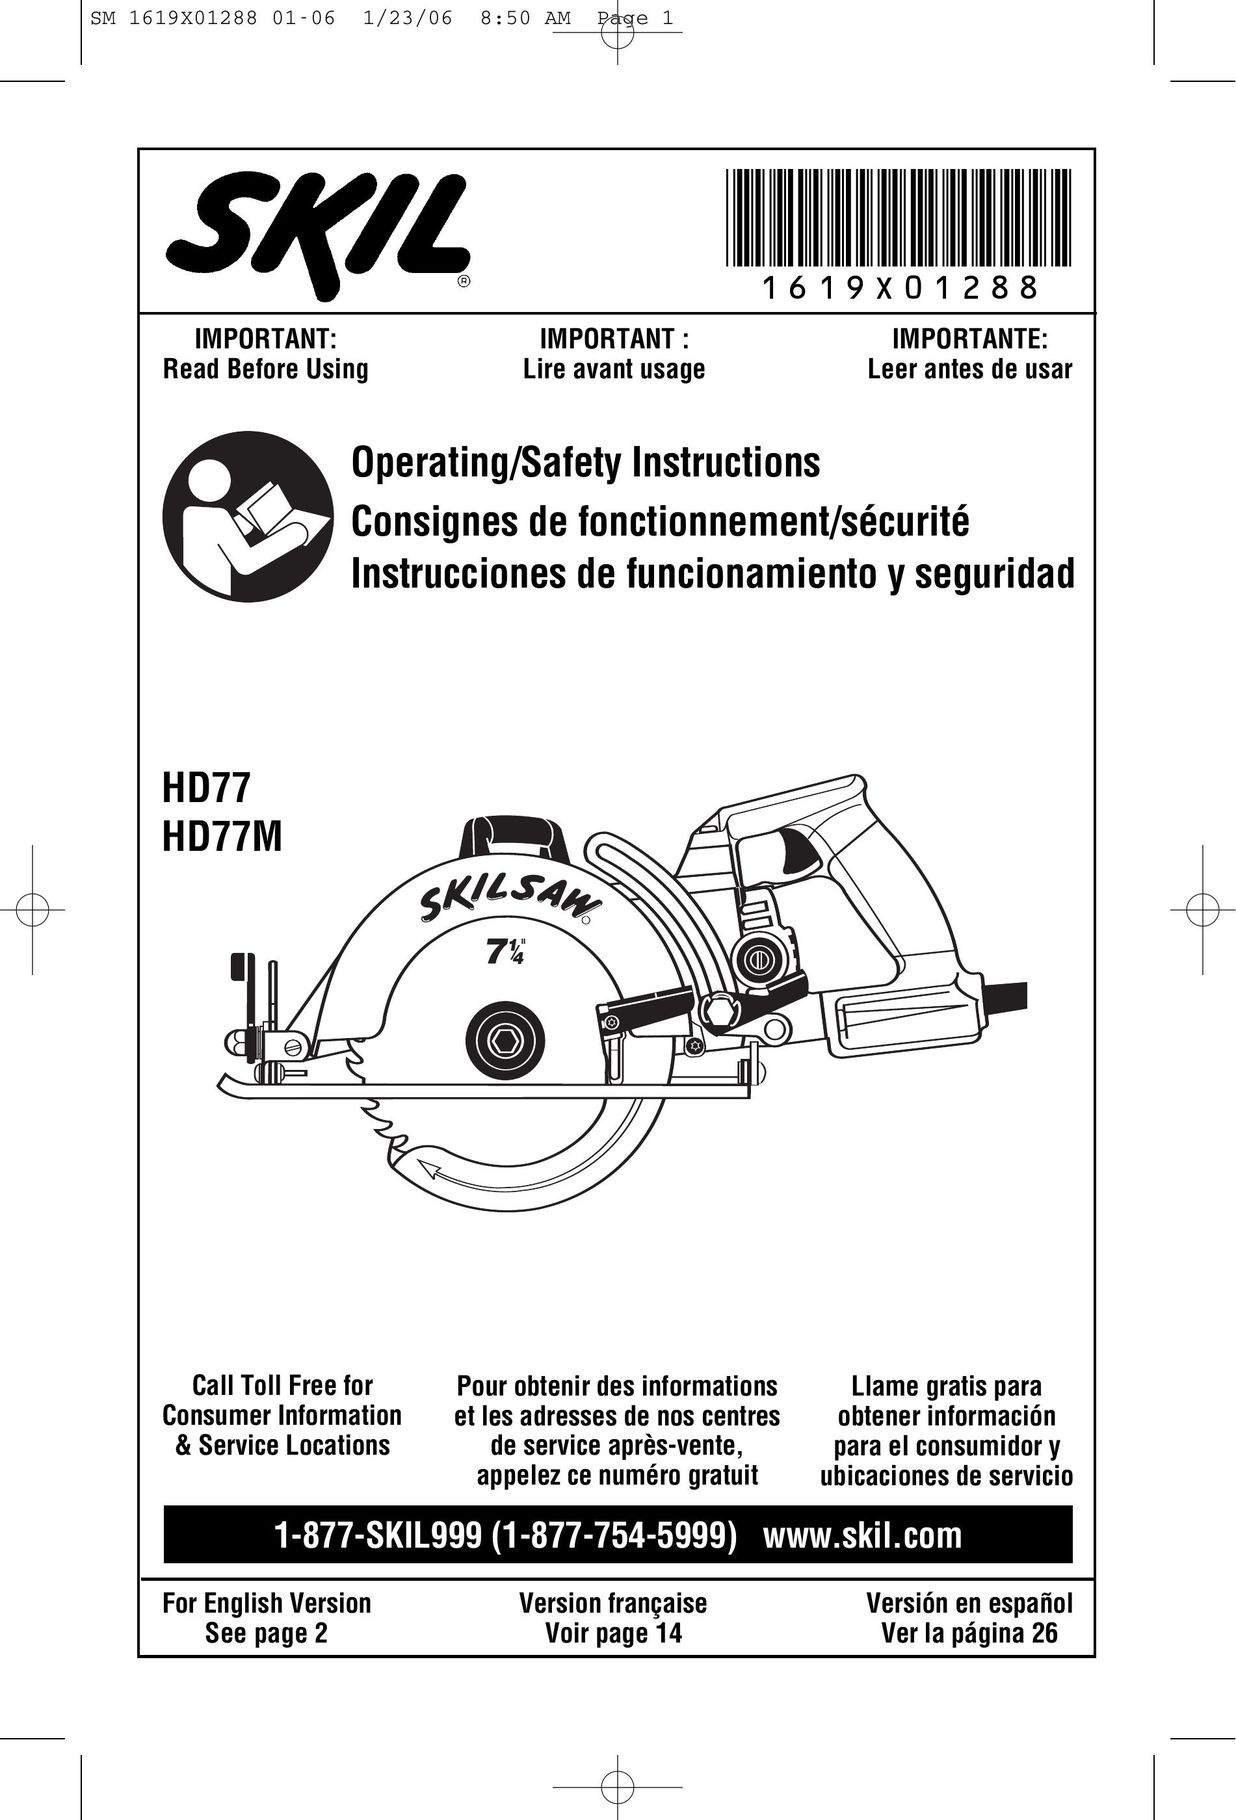 Skil HD77M Saw User Manual